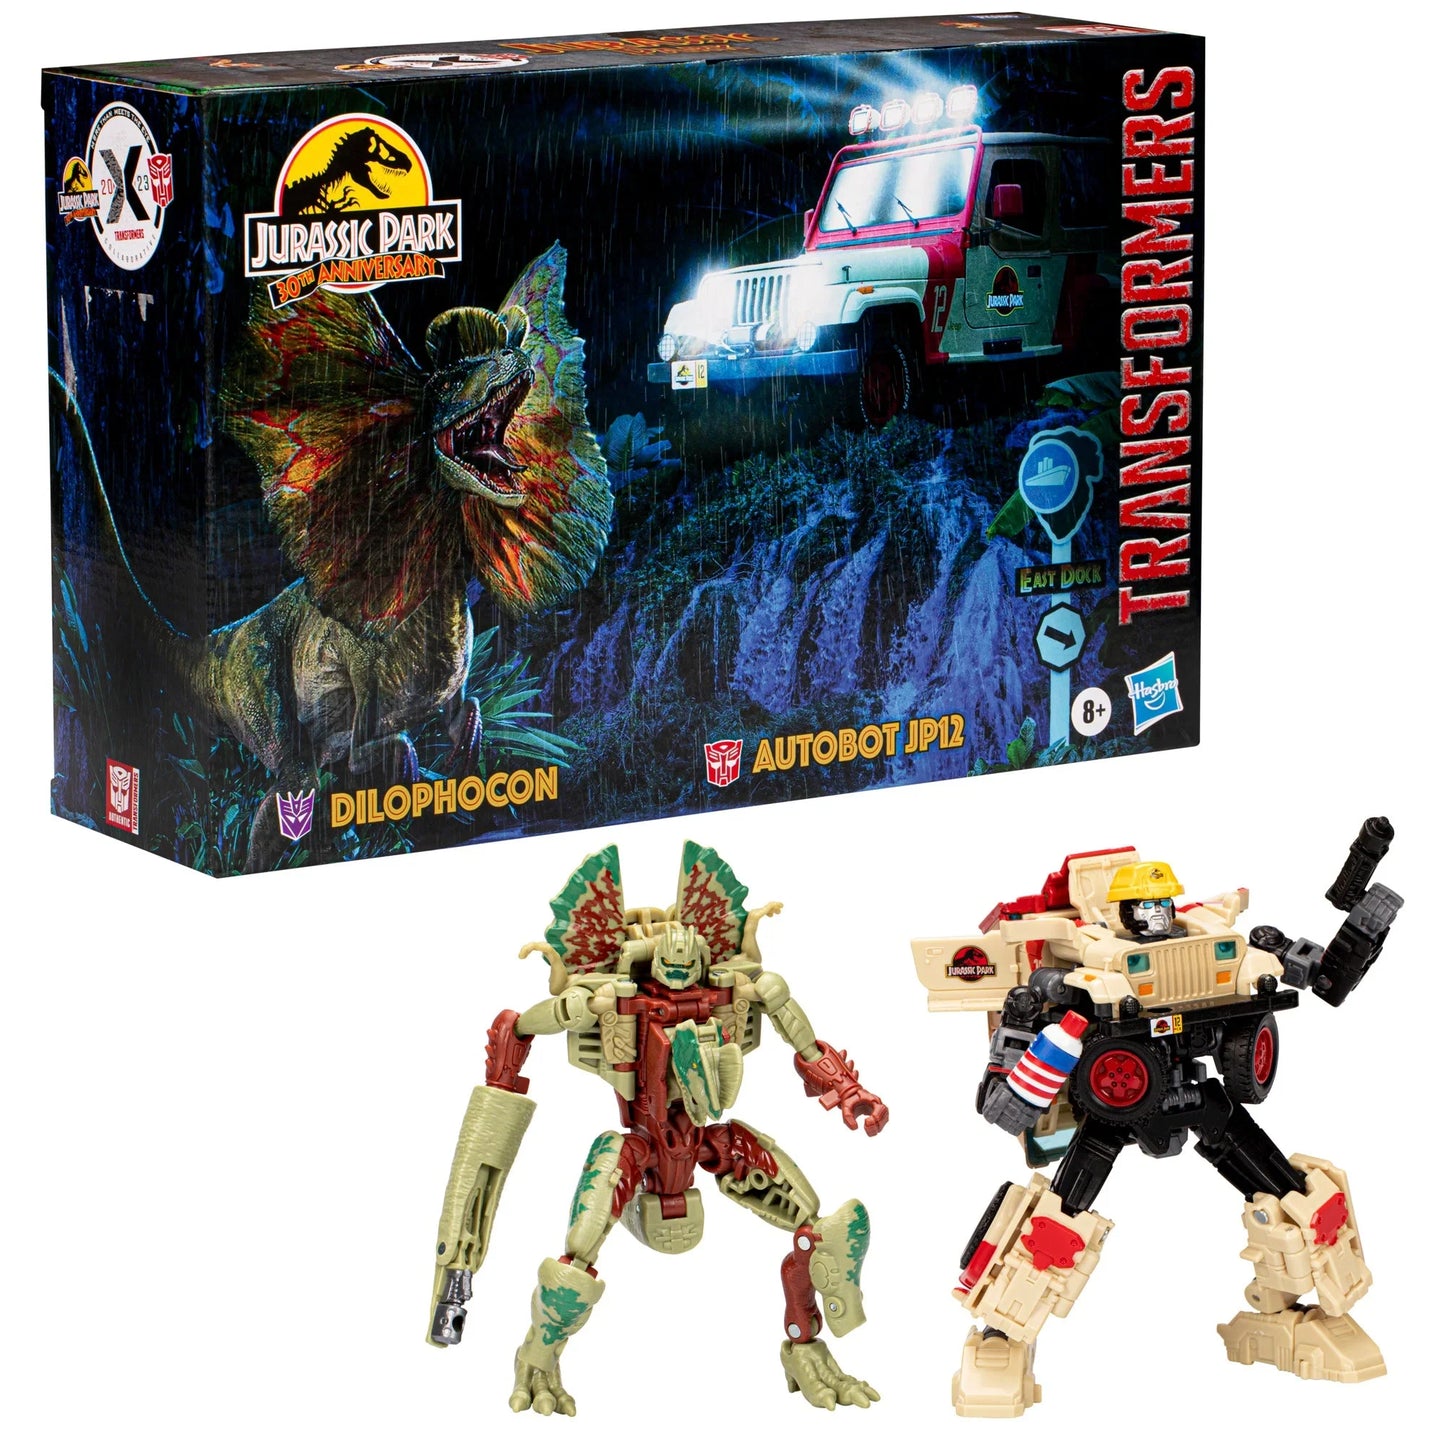 Transformers x Jurassic Park - Dilophocon y Autobot JP12